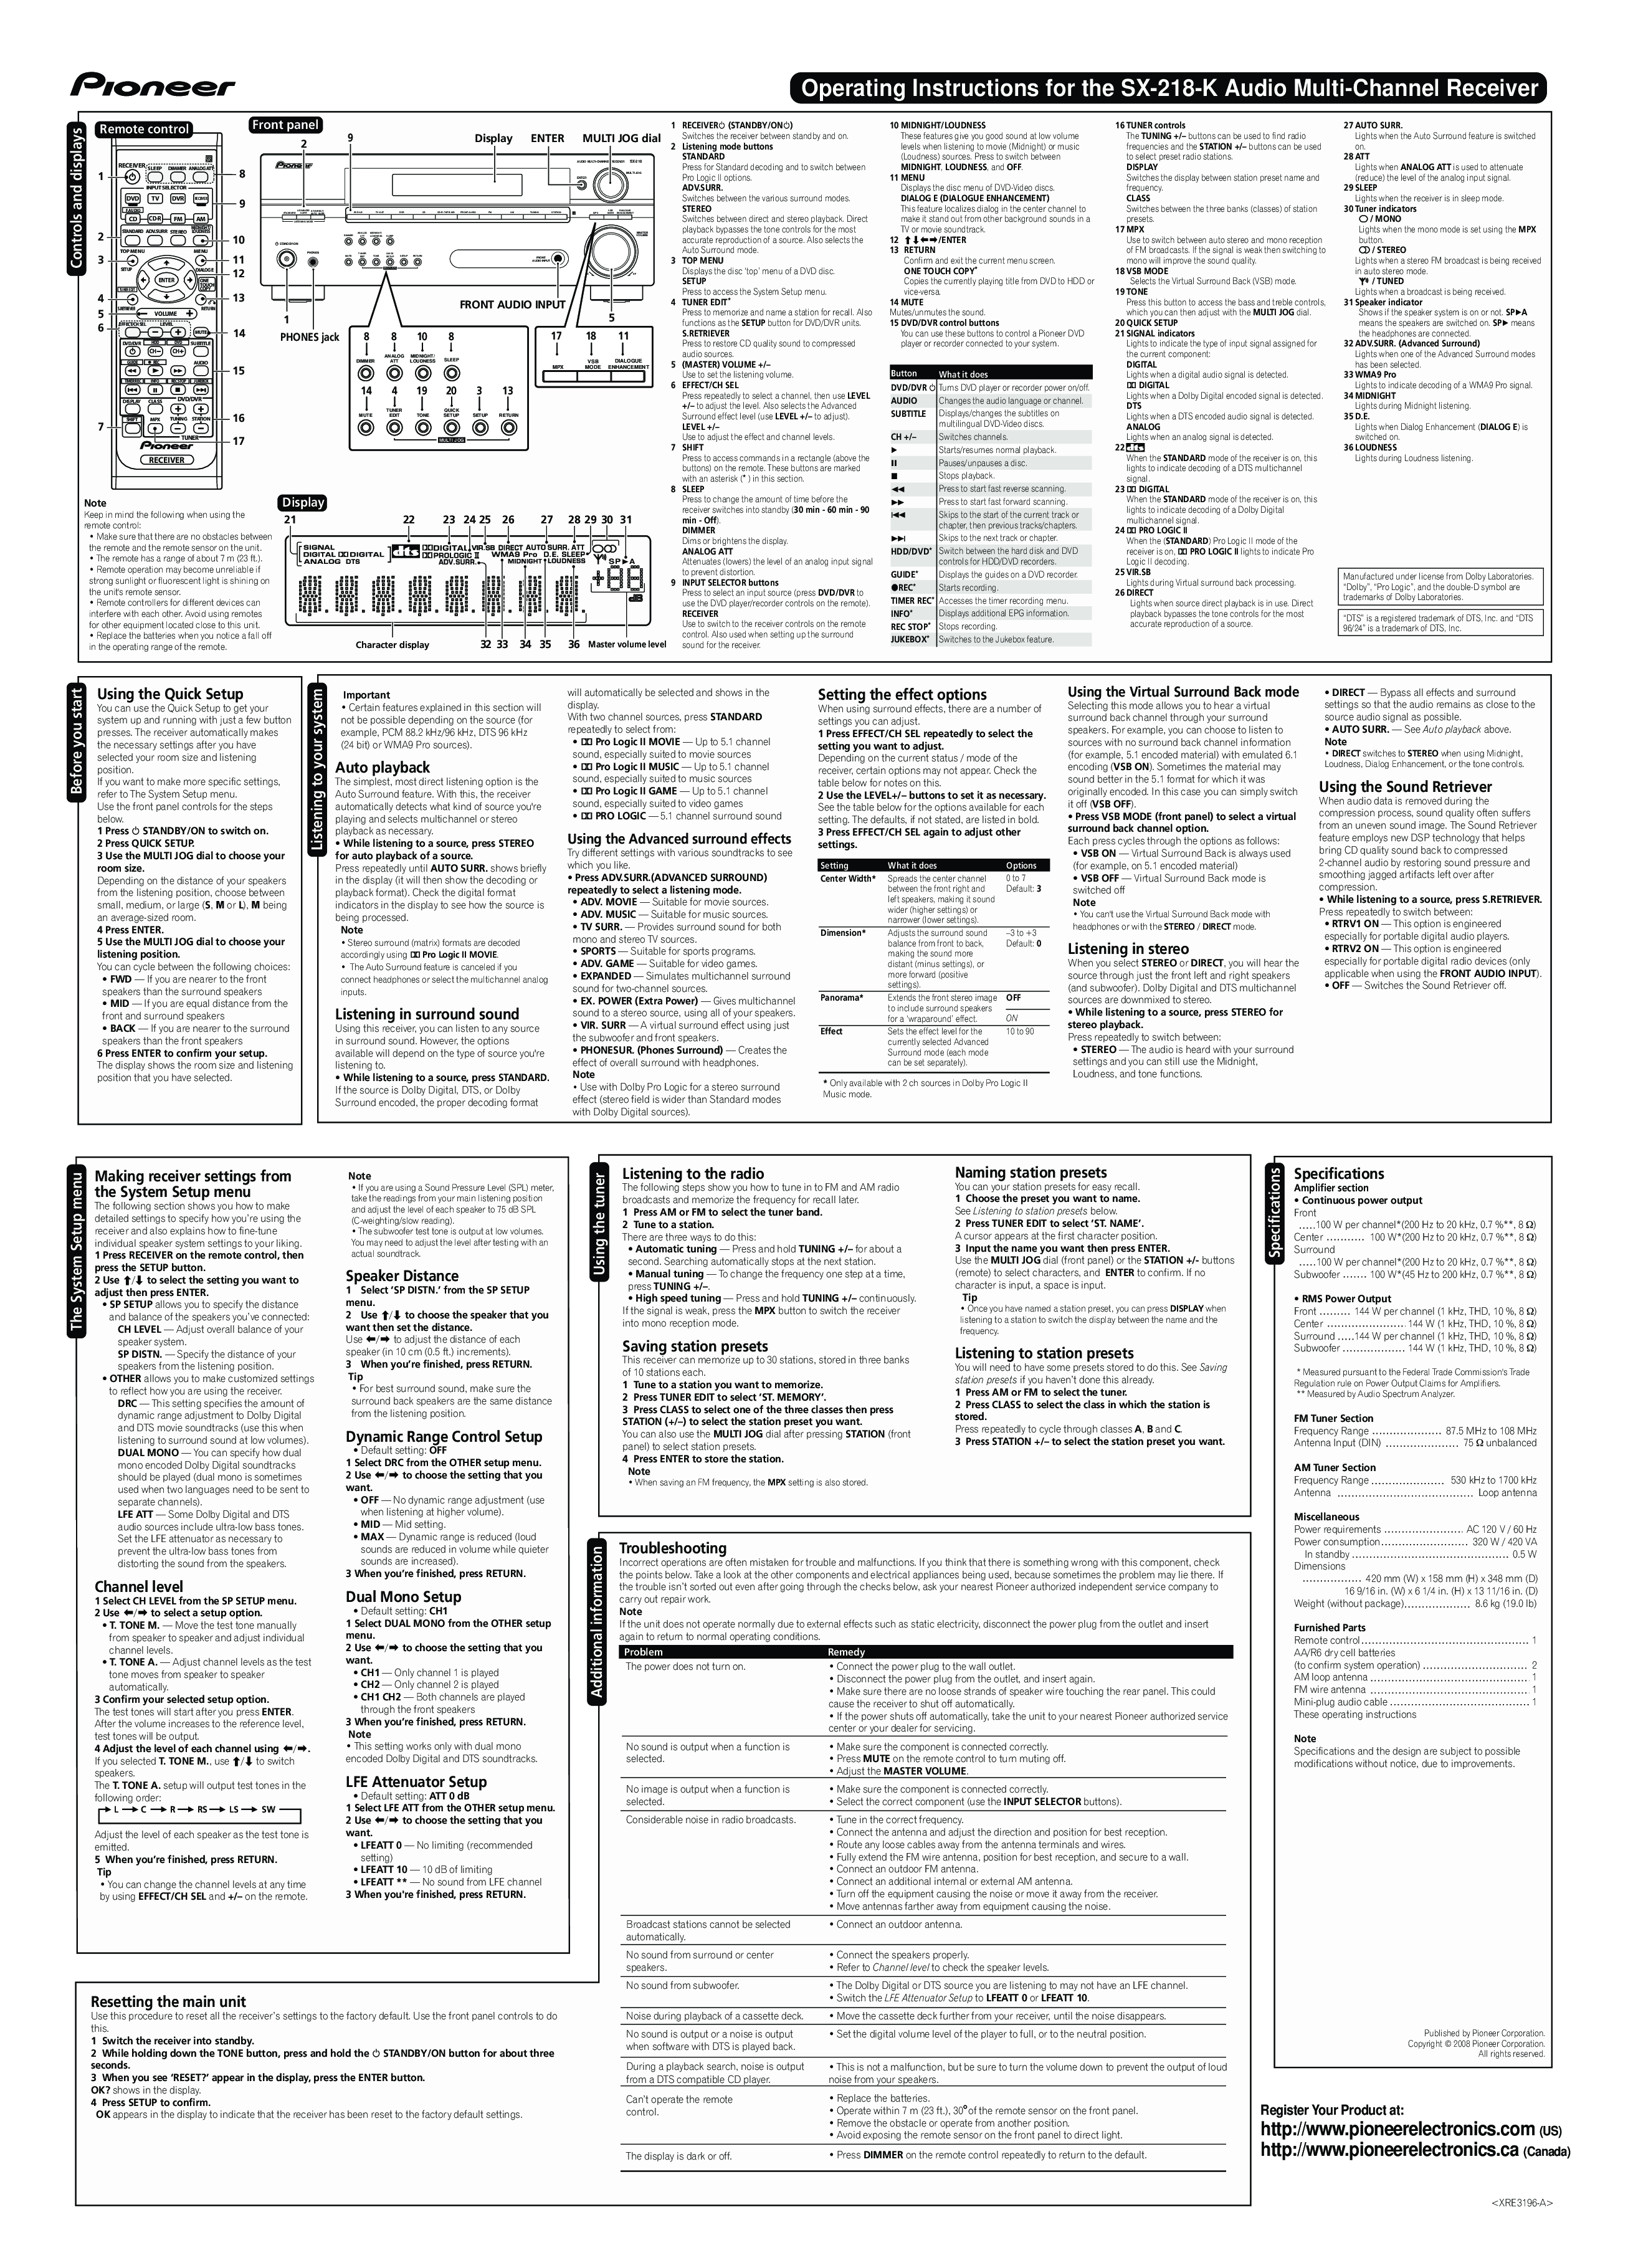 Pioneer sx-218-k User Manual